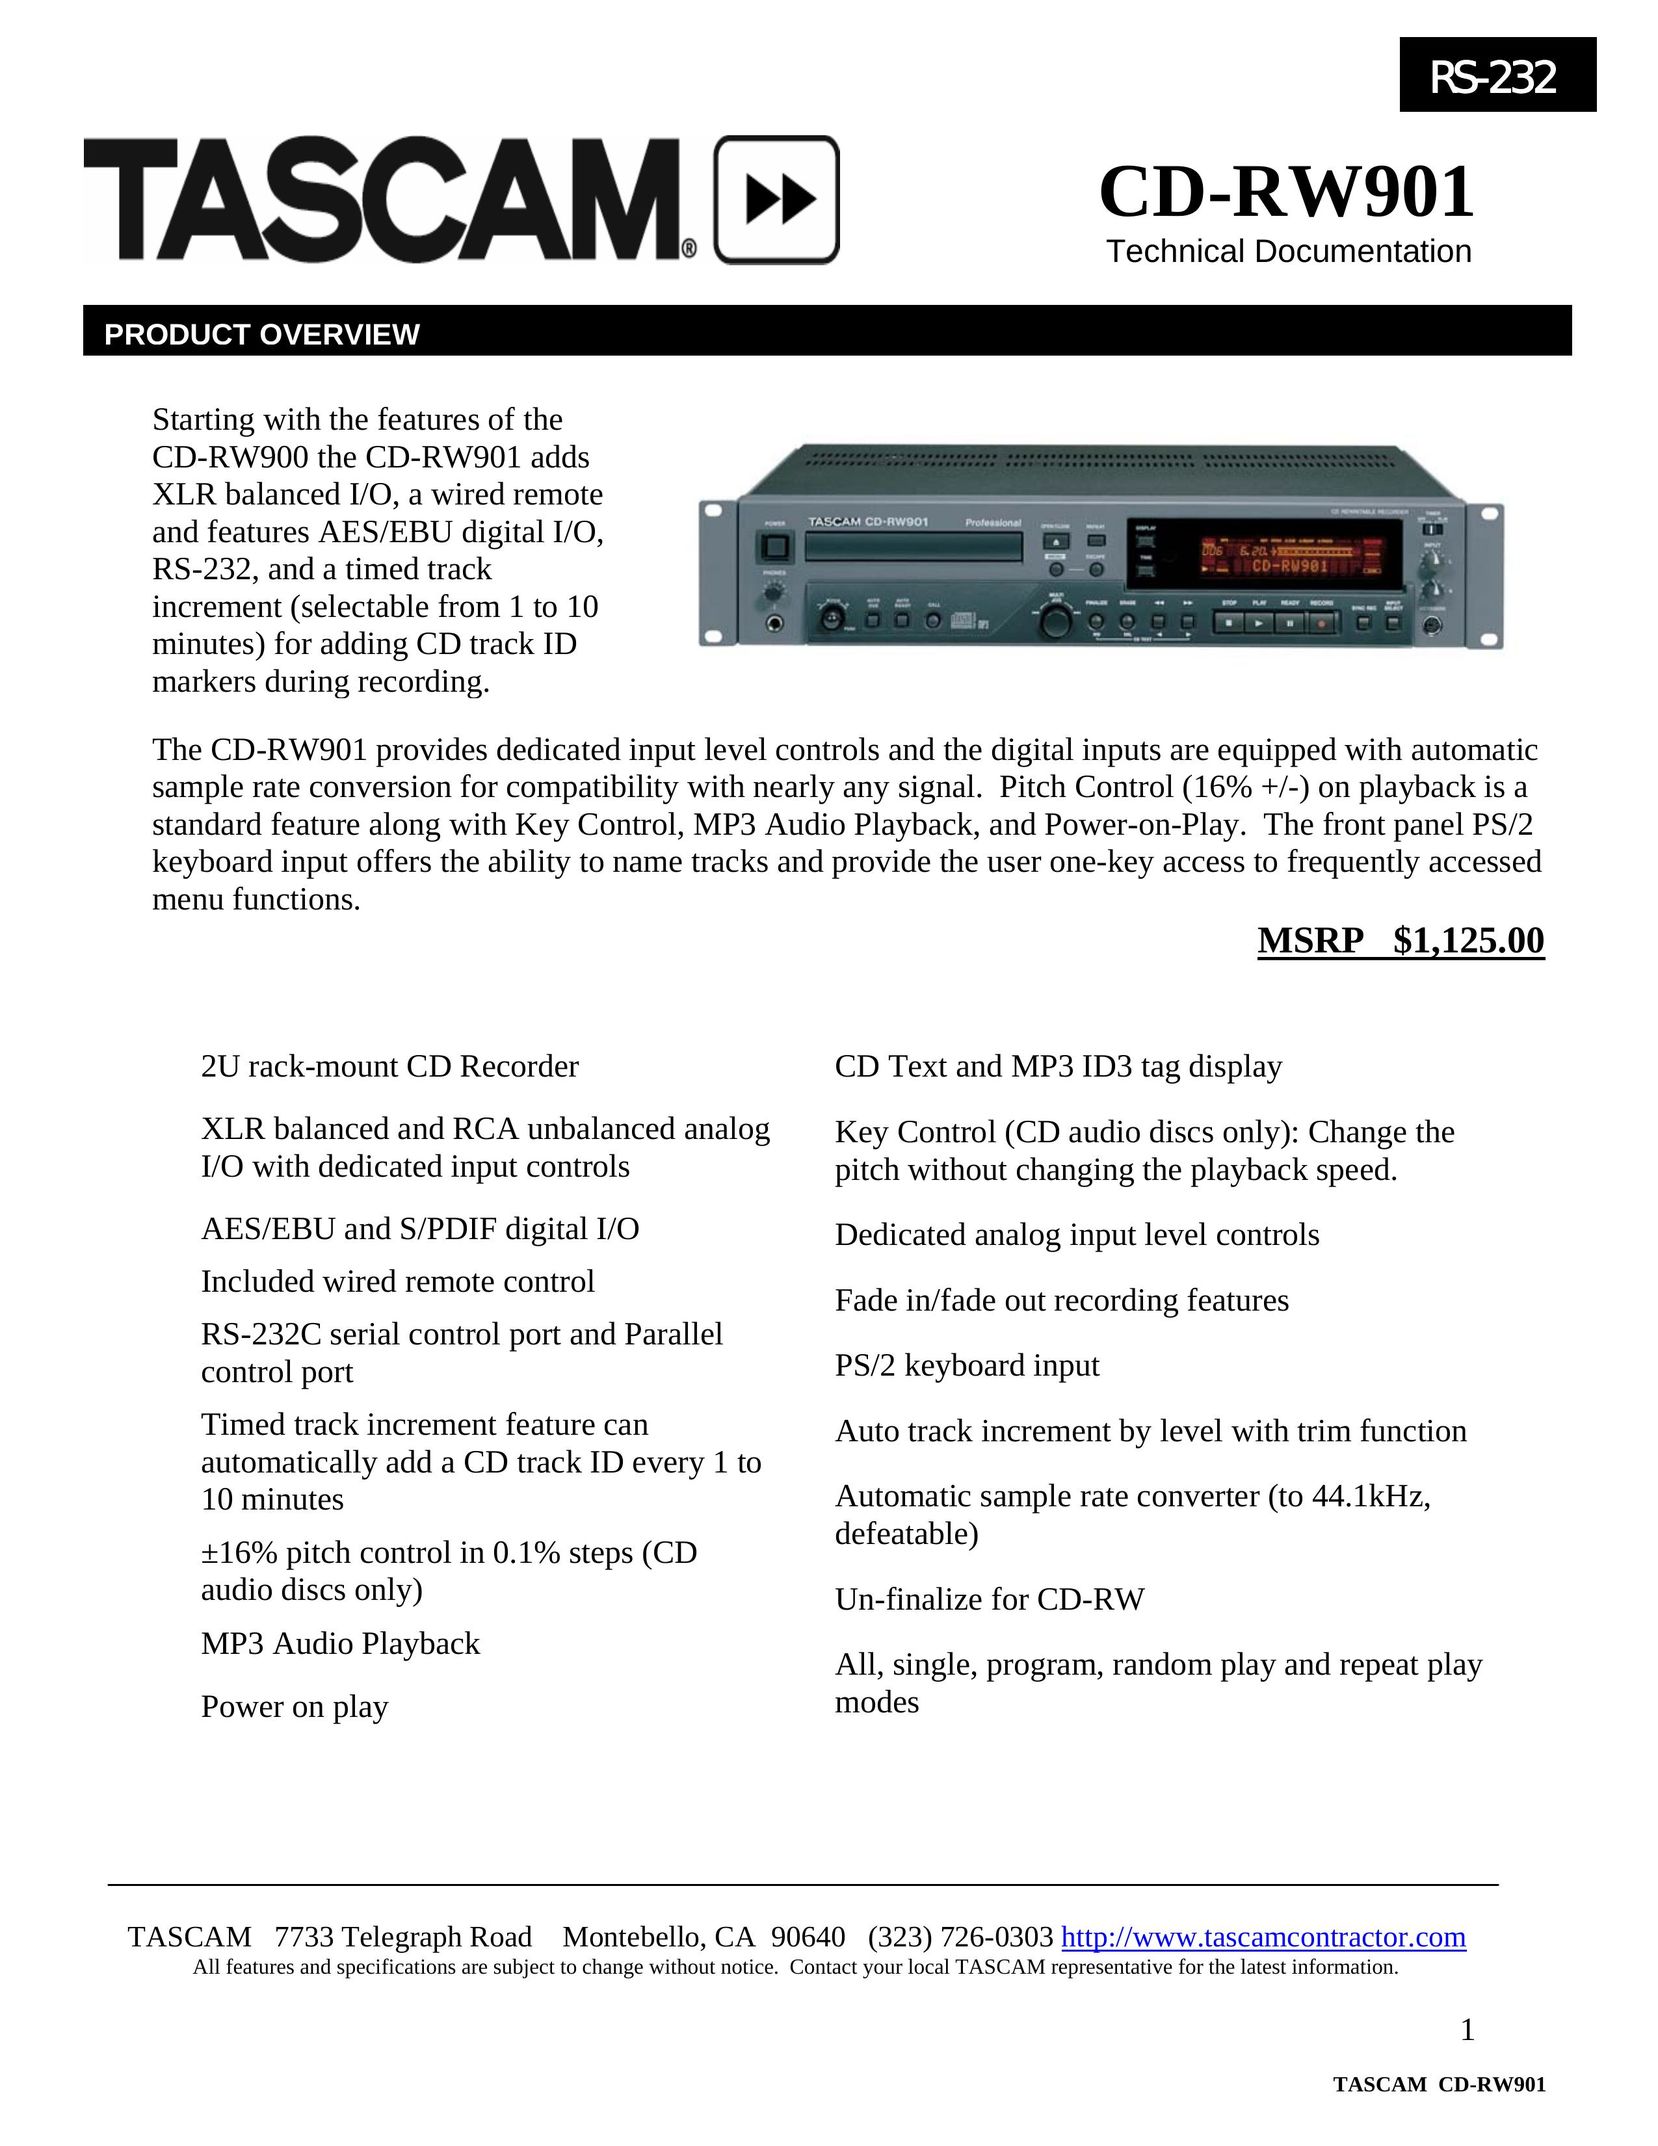 Tascam CD-RW901 CD Player User Manual